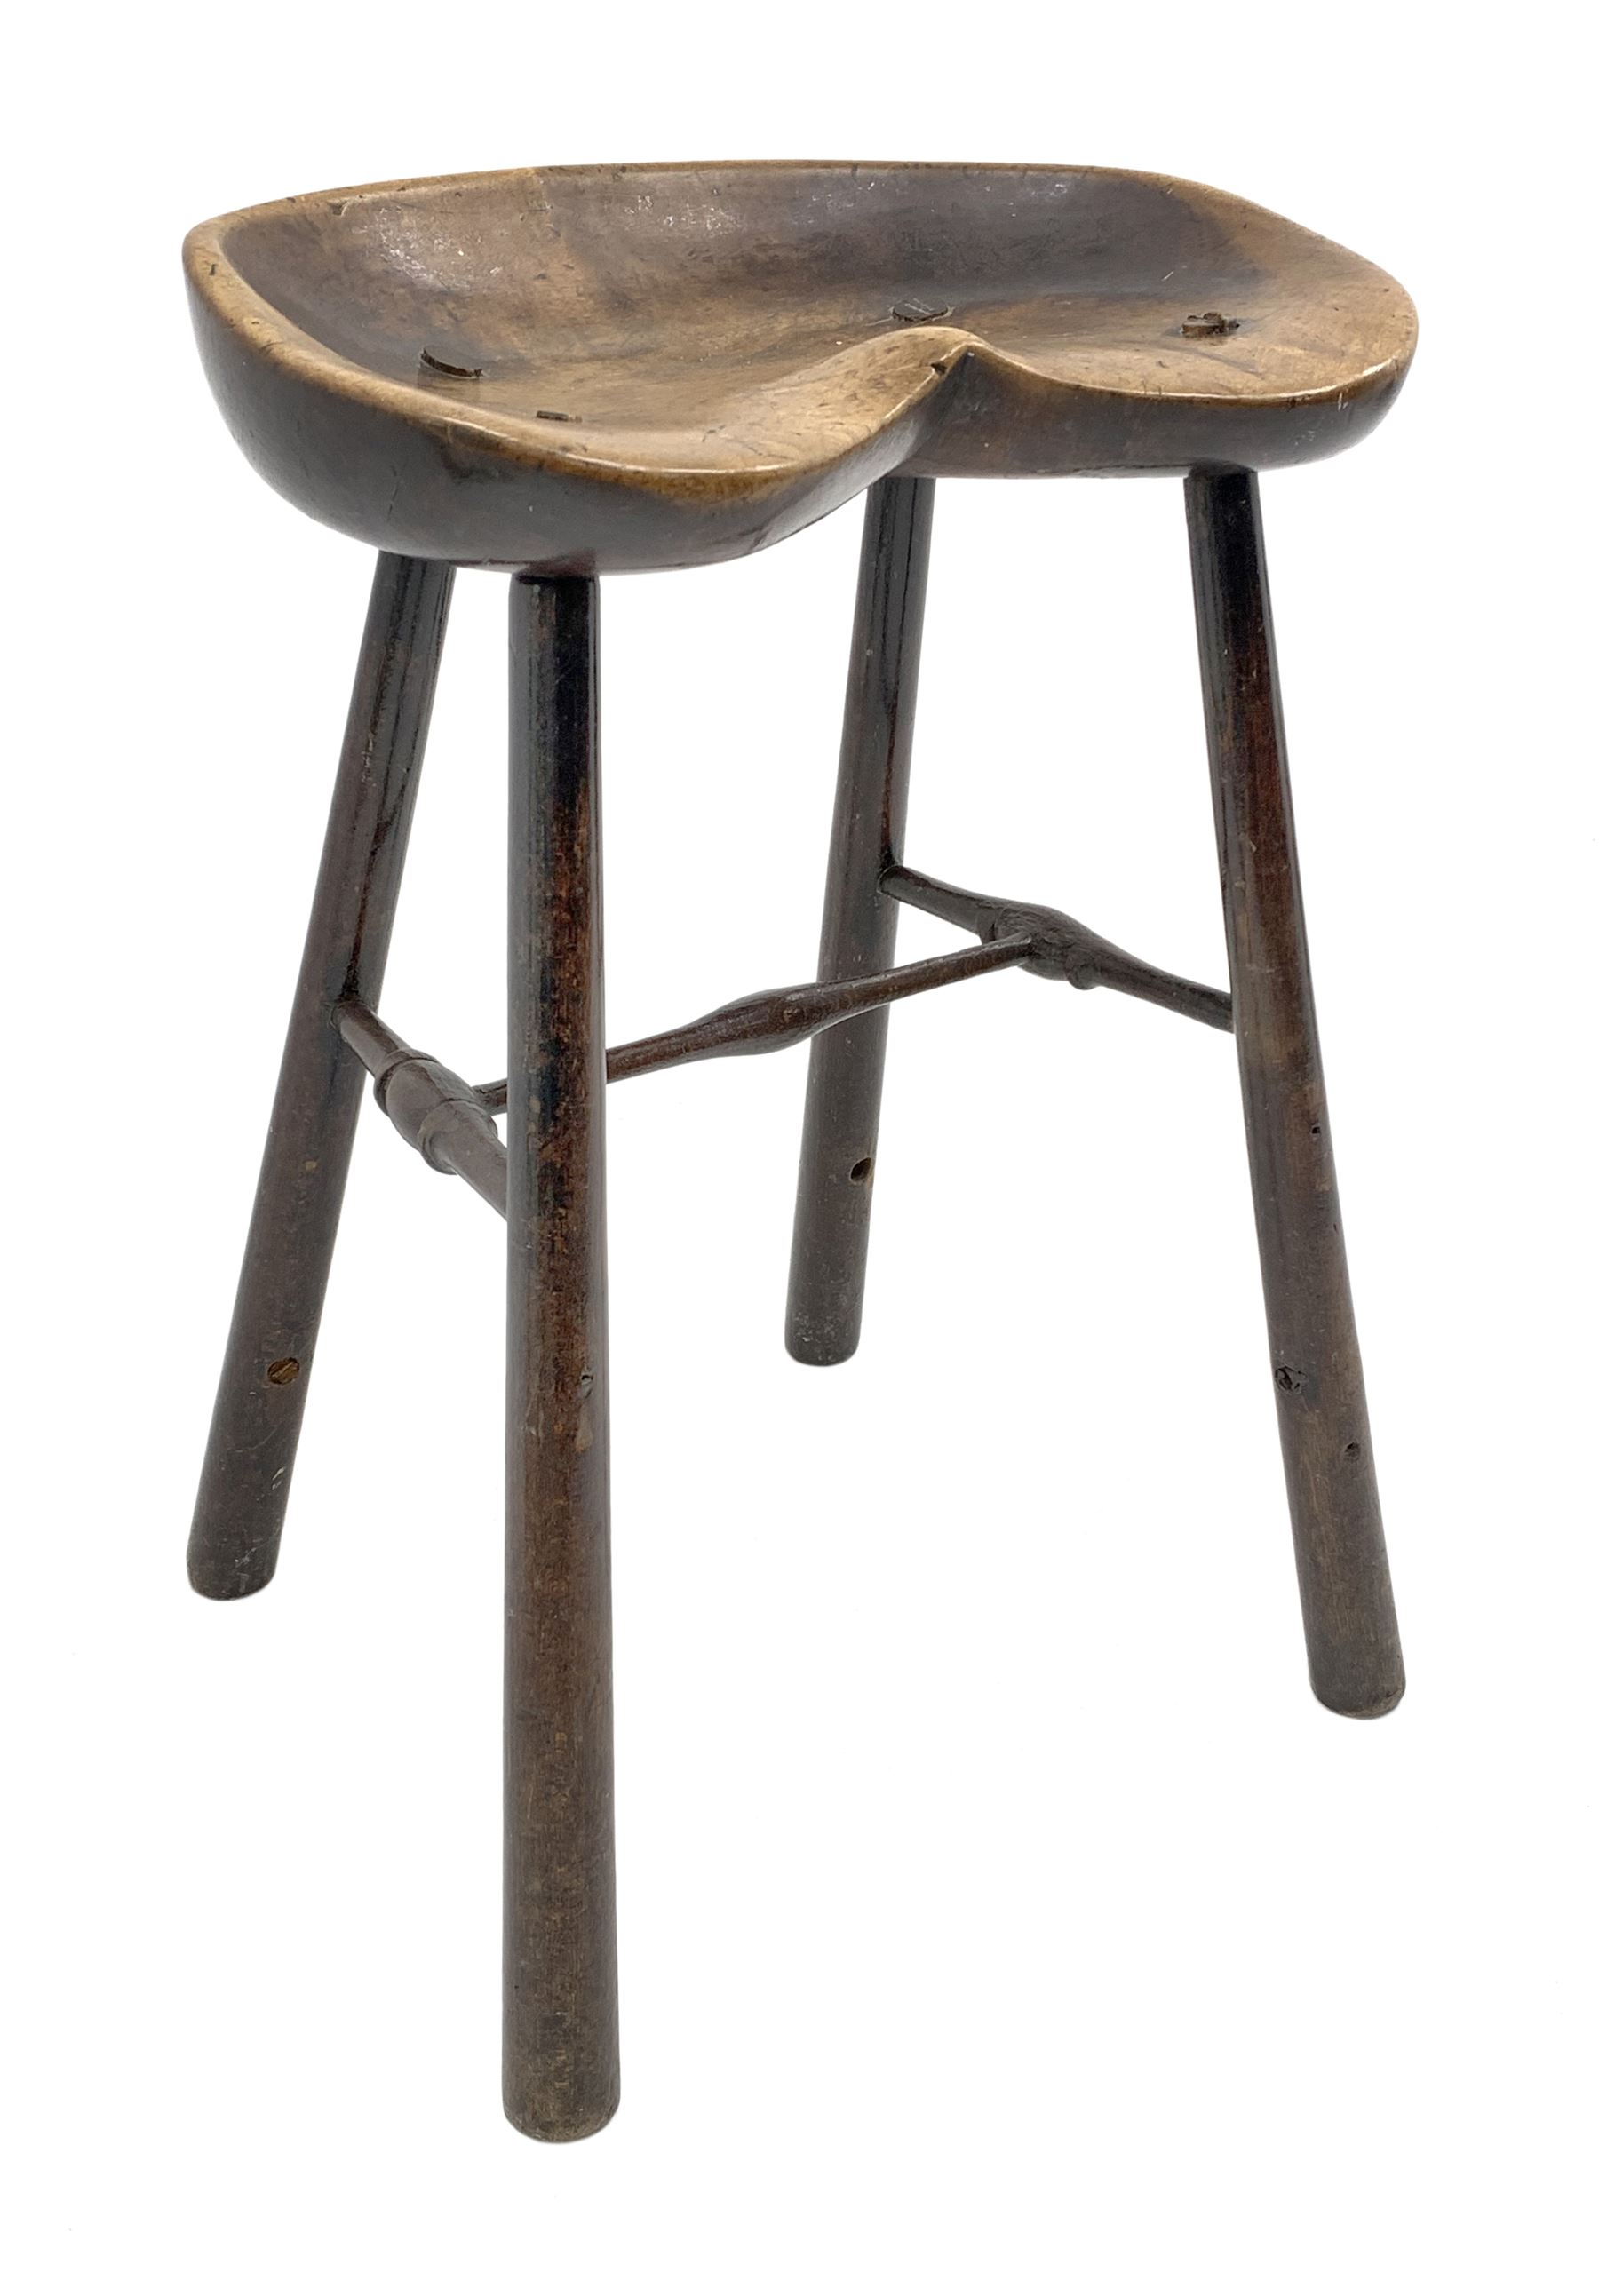 18th/19th century beech saddle stool - Image 2 of 8